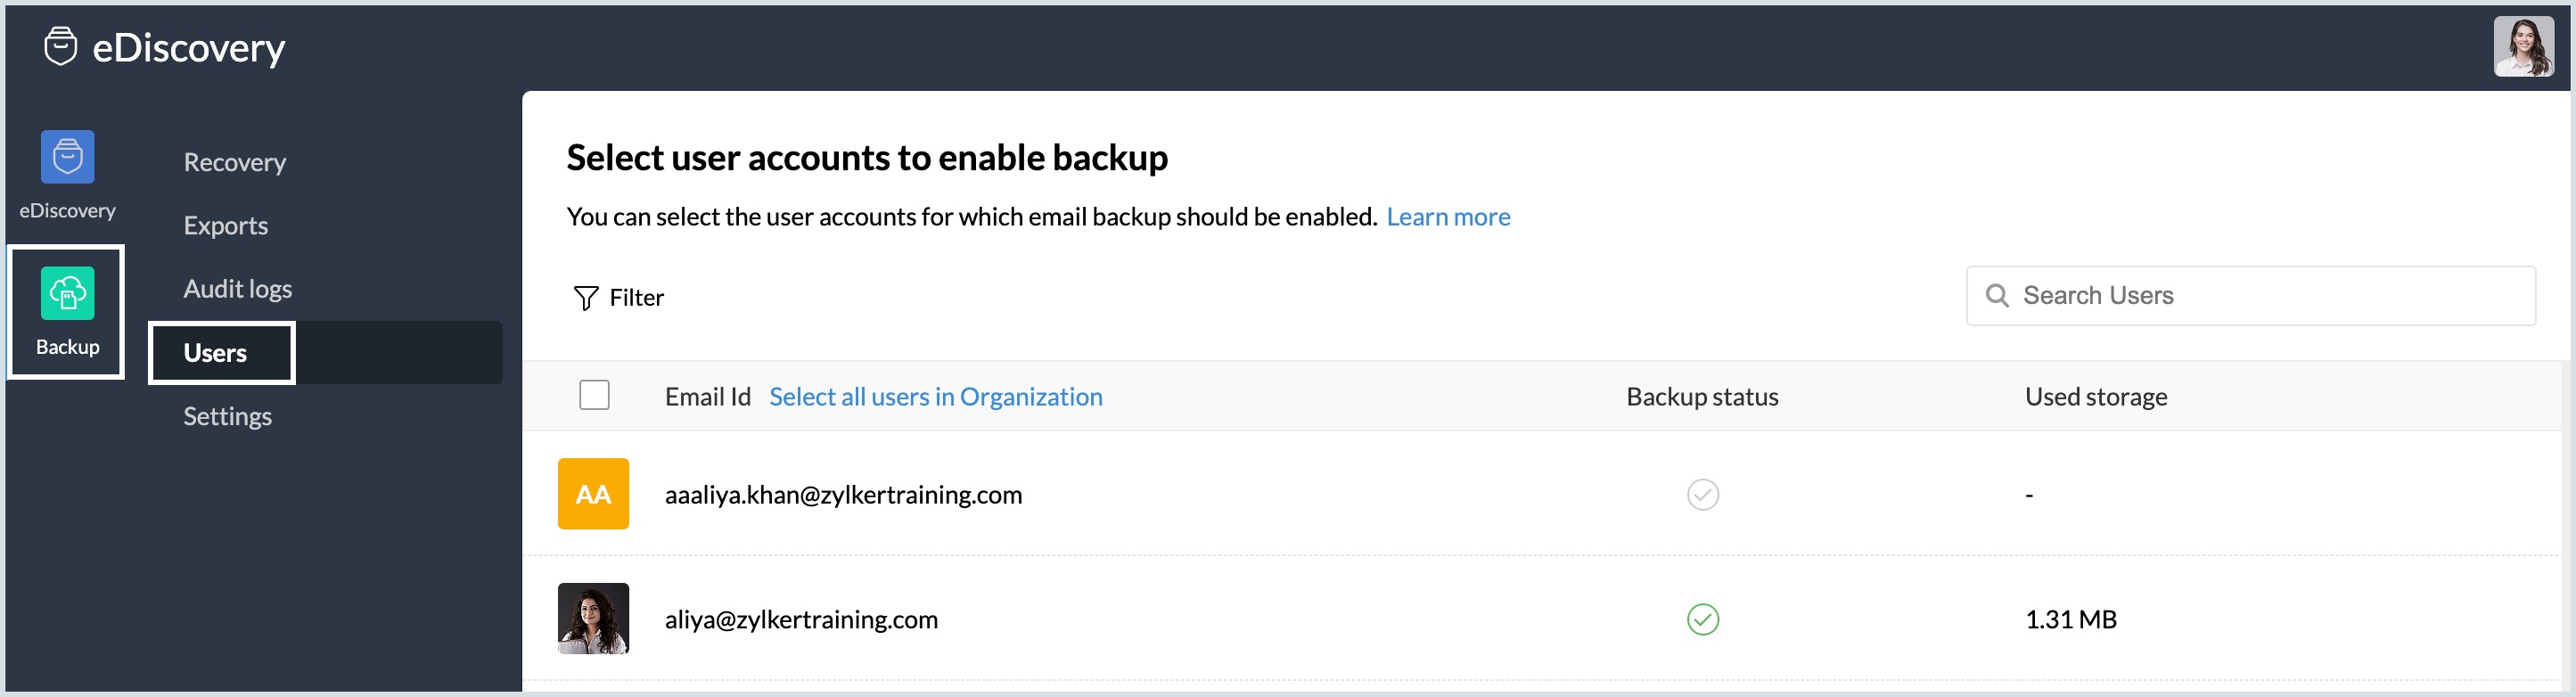 select users to enable backup